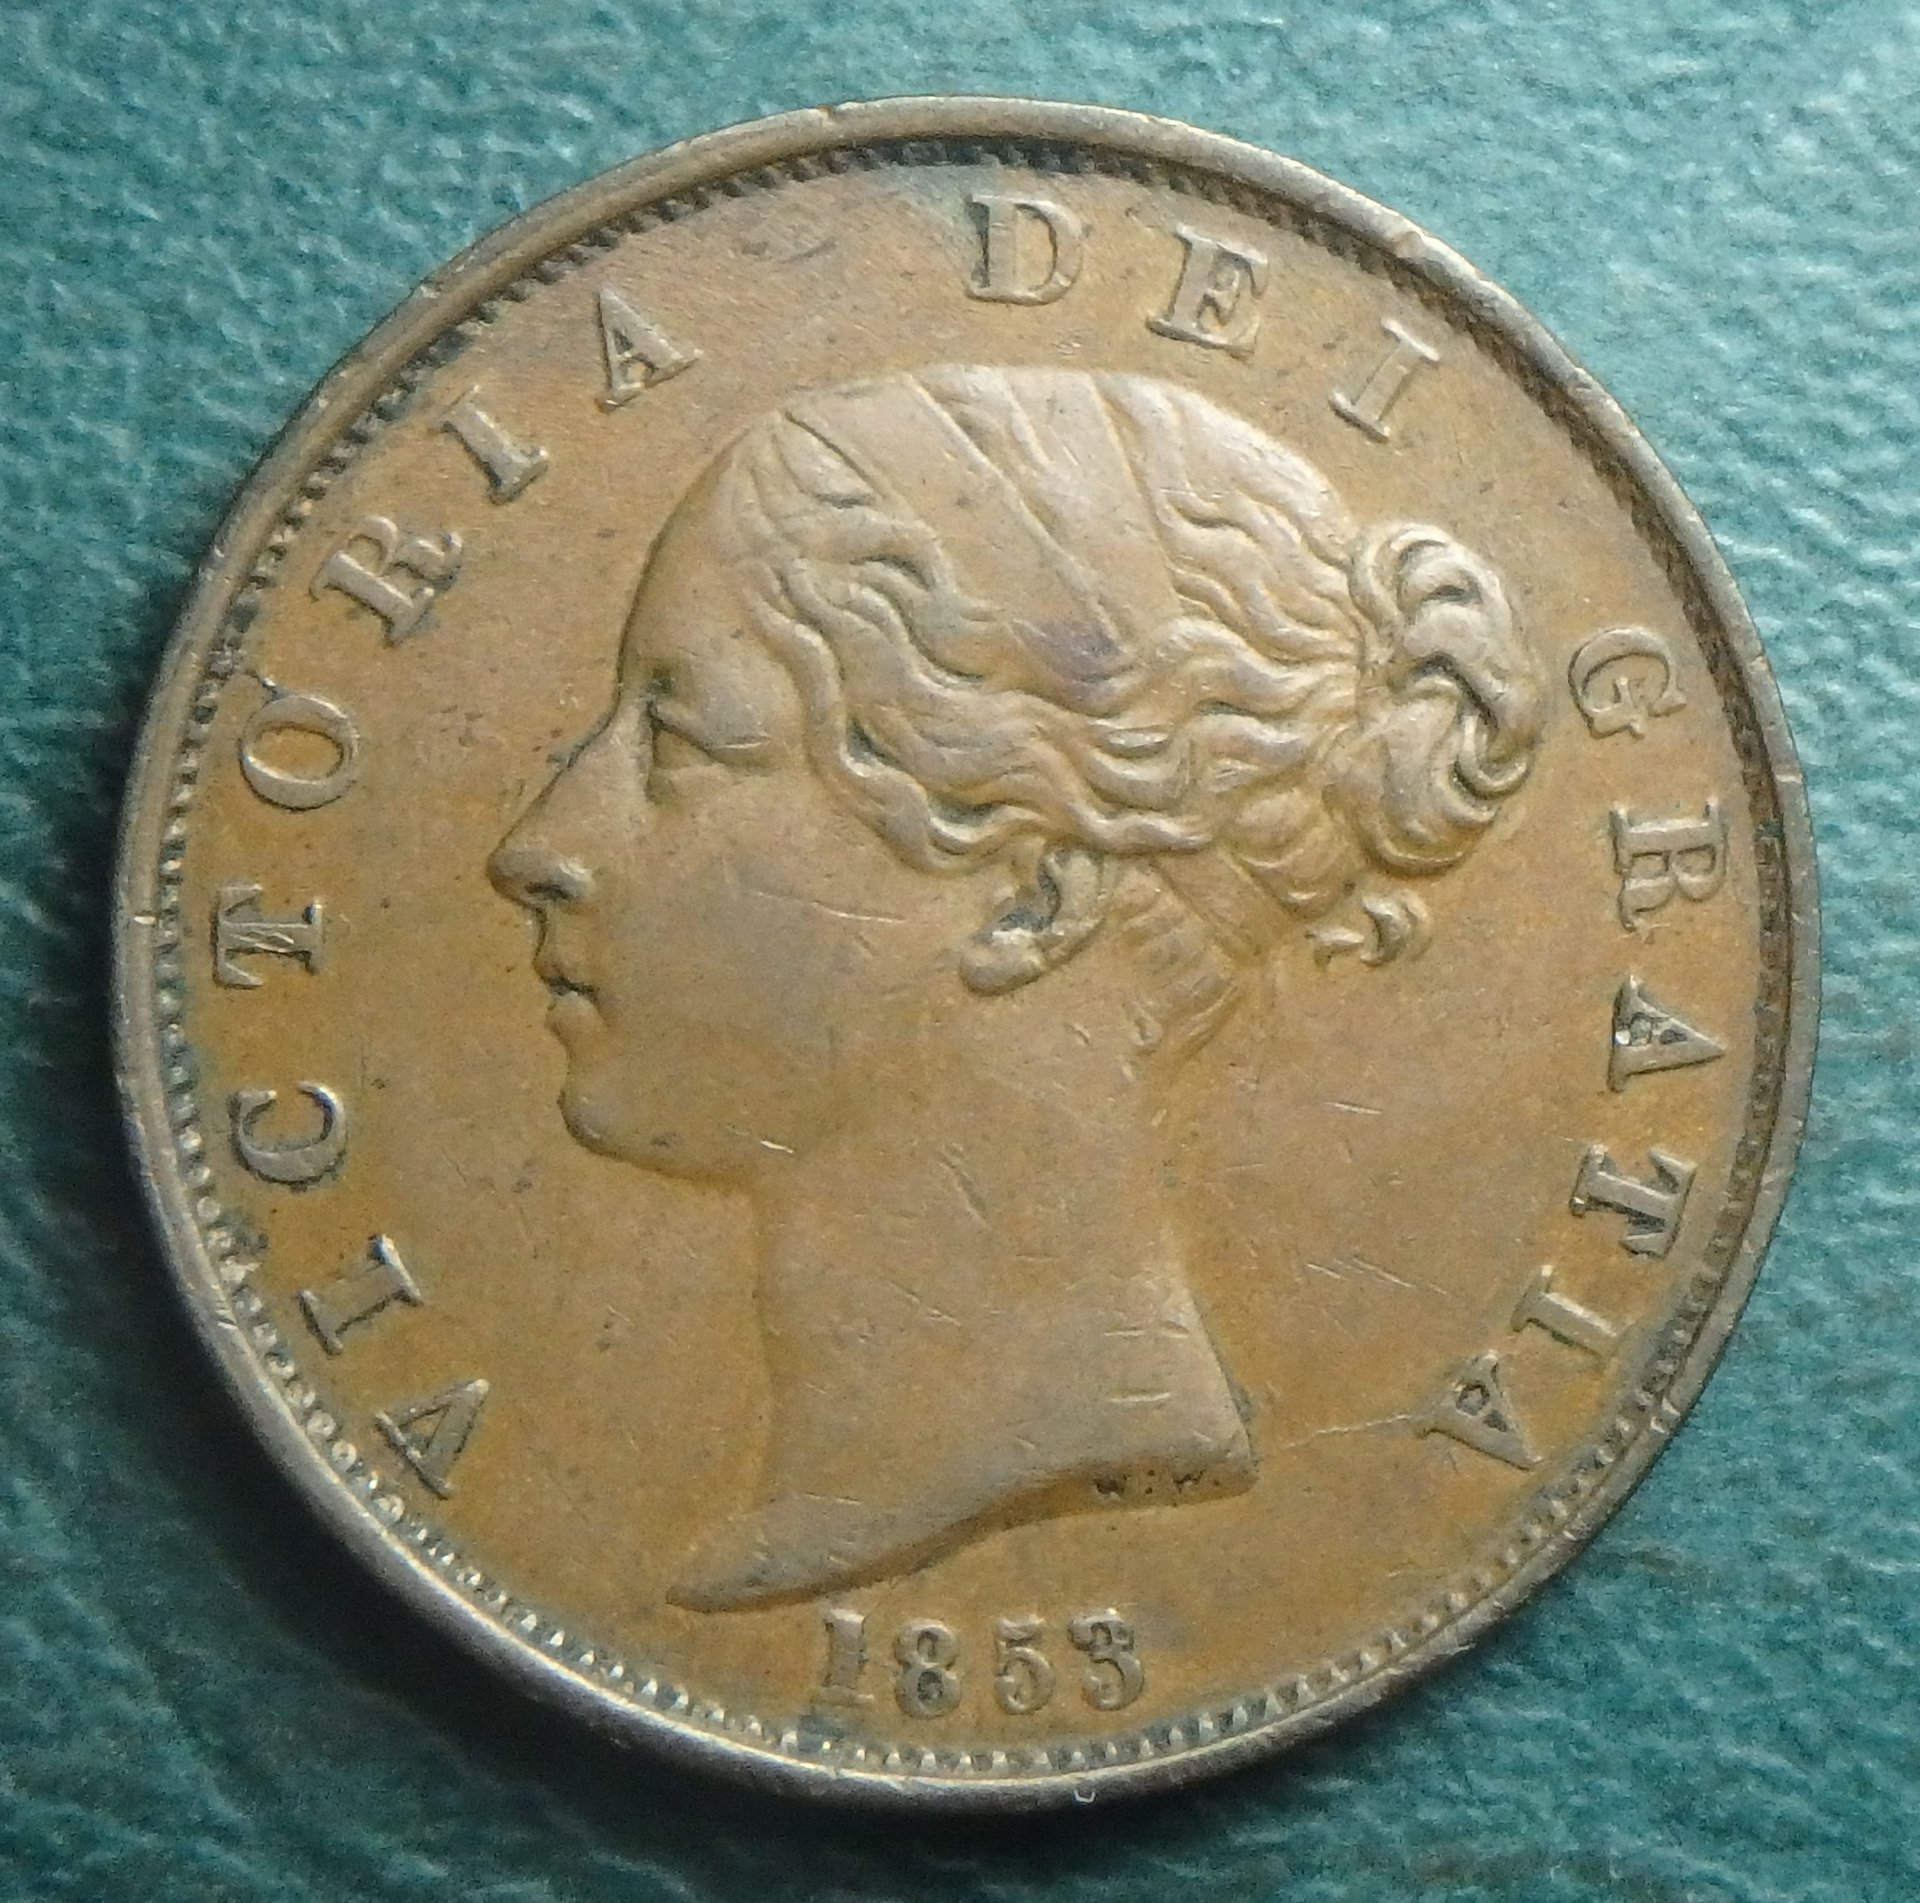 1853 GB 1-2 p obv (2).JPG